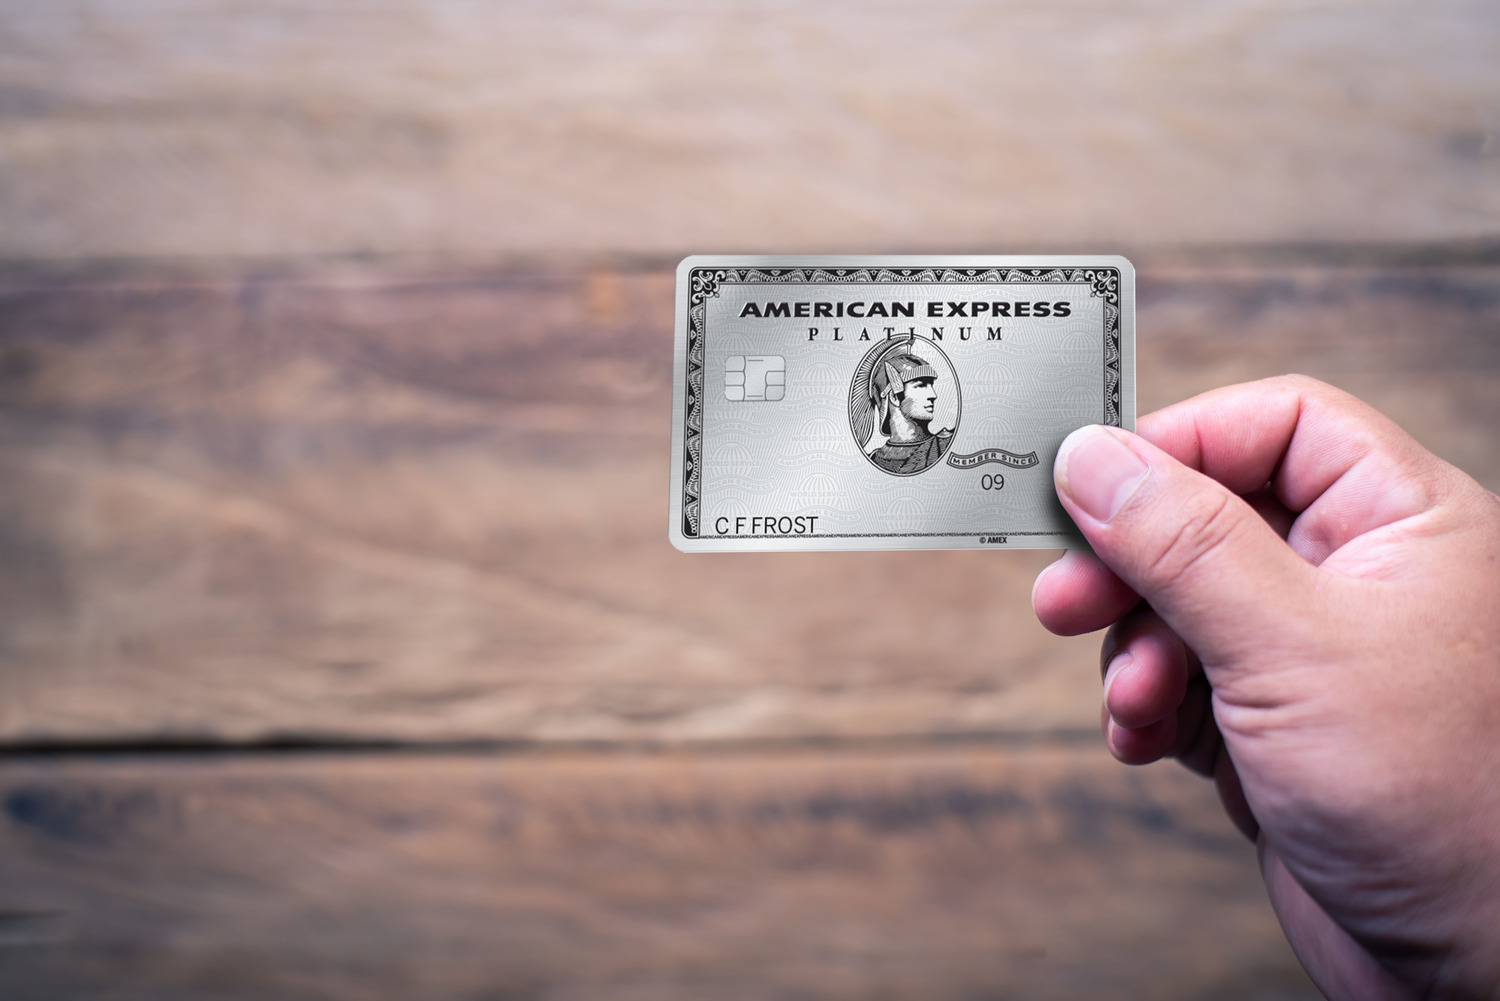 Amex platinum card as an alternative to the Centurion card